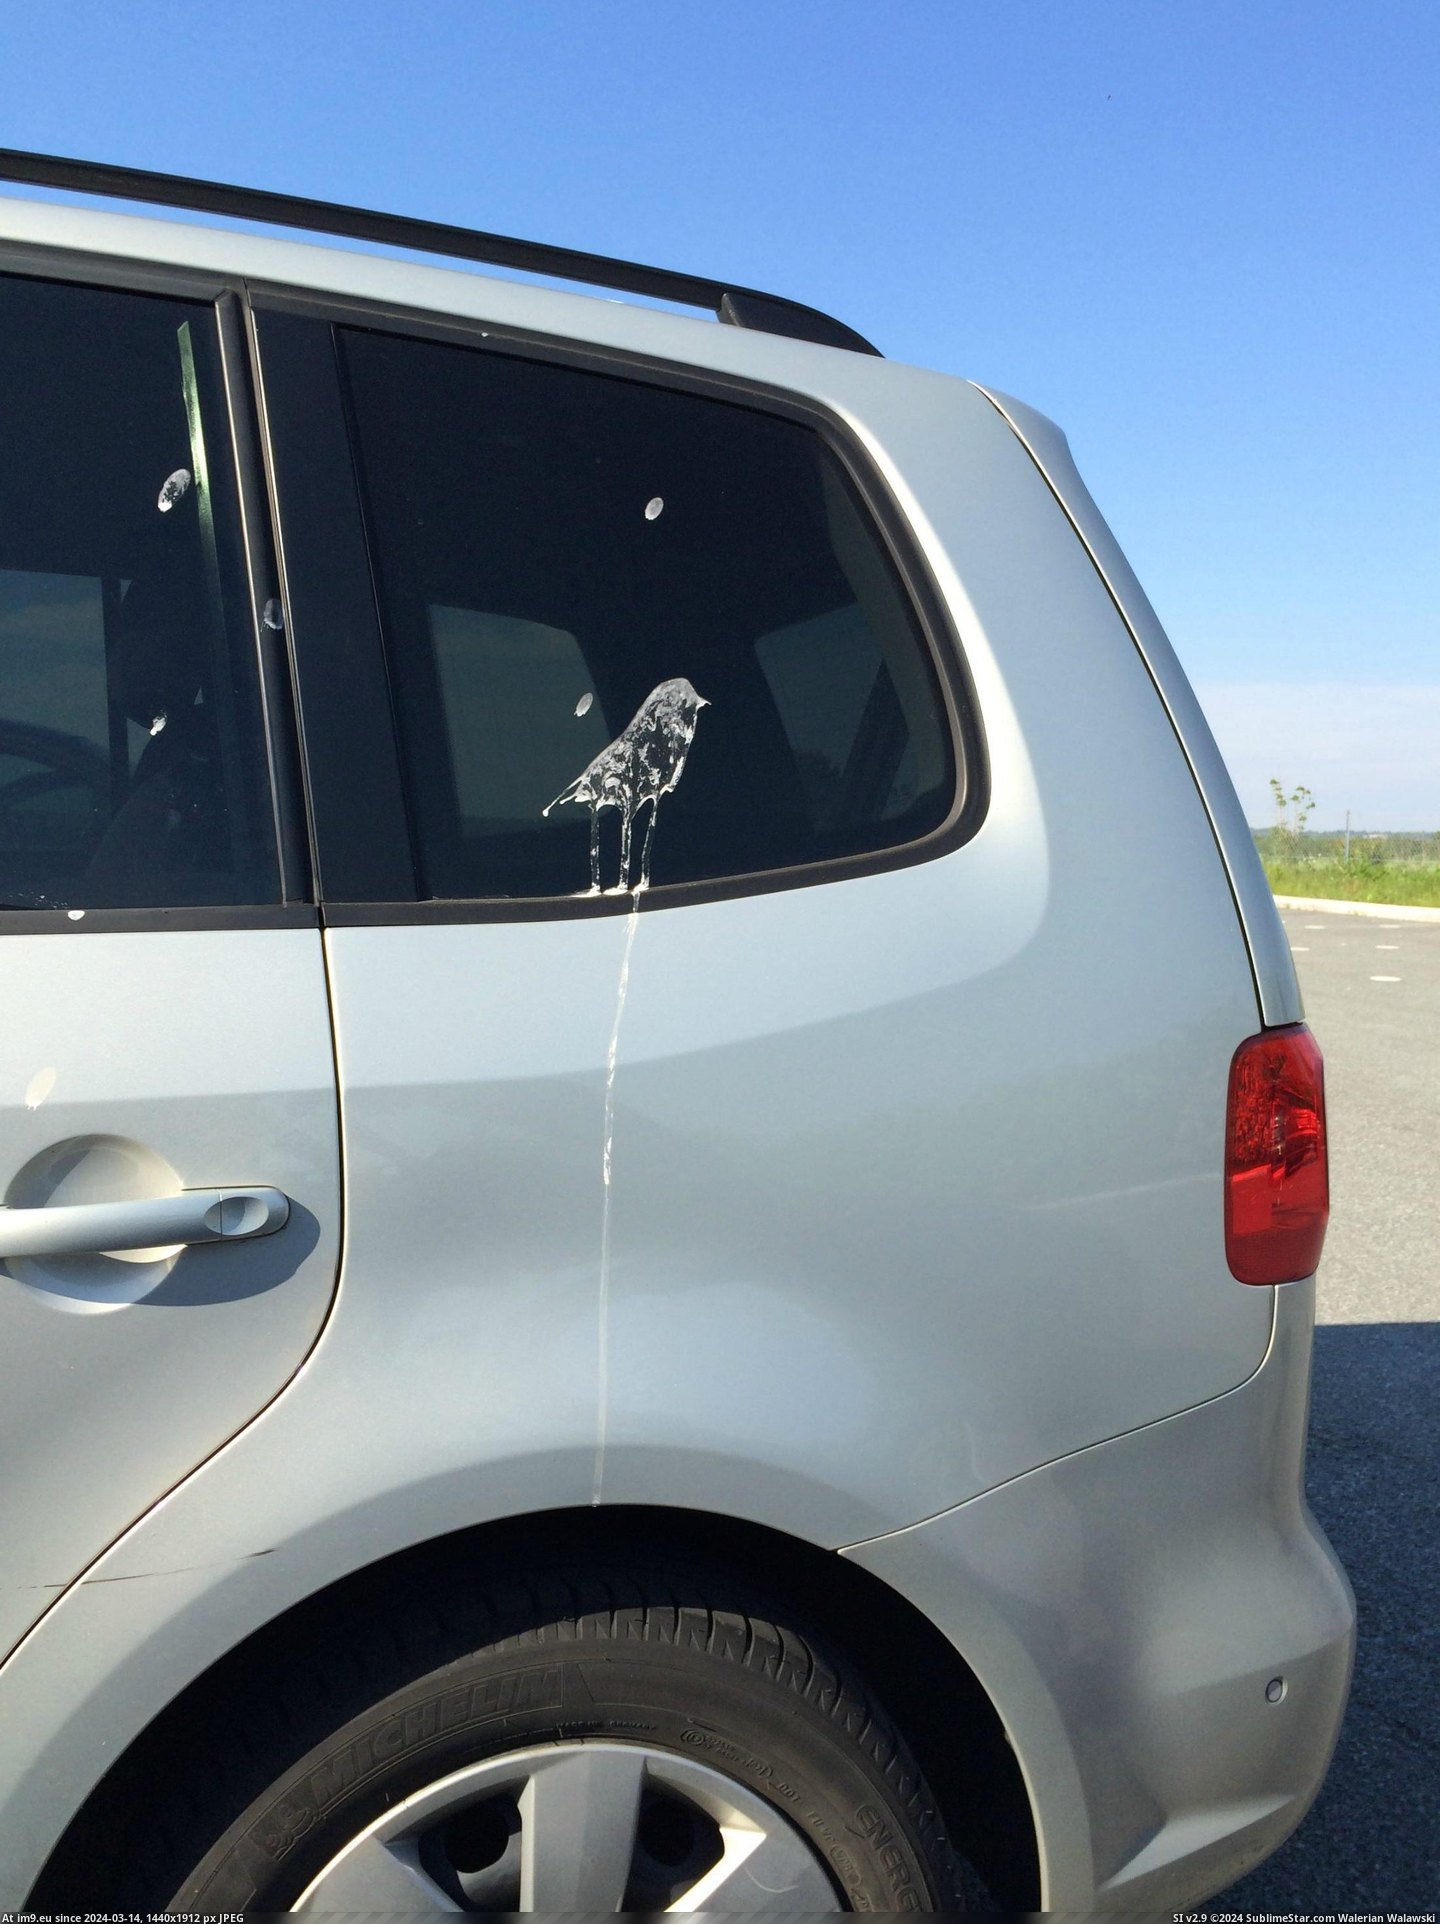 #Funny #Lot #Birdpoop #Parking #Masterpiece [Funny] Birdpoop masterpiece at the parking lot Pic. (Obraz z album My r/FUNNY favs))